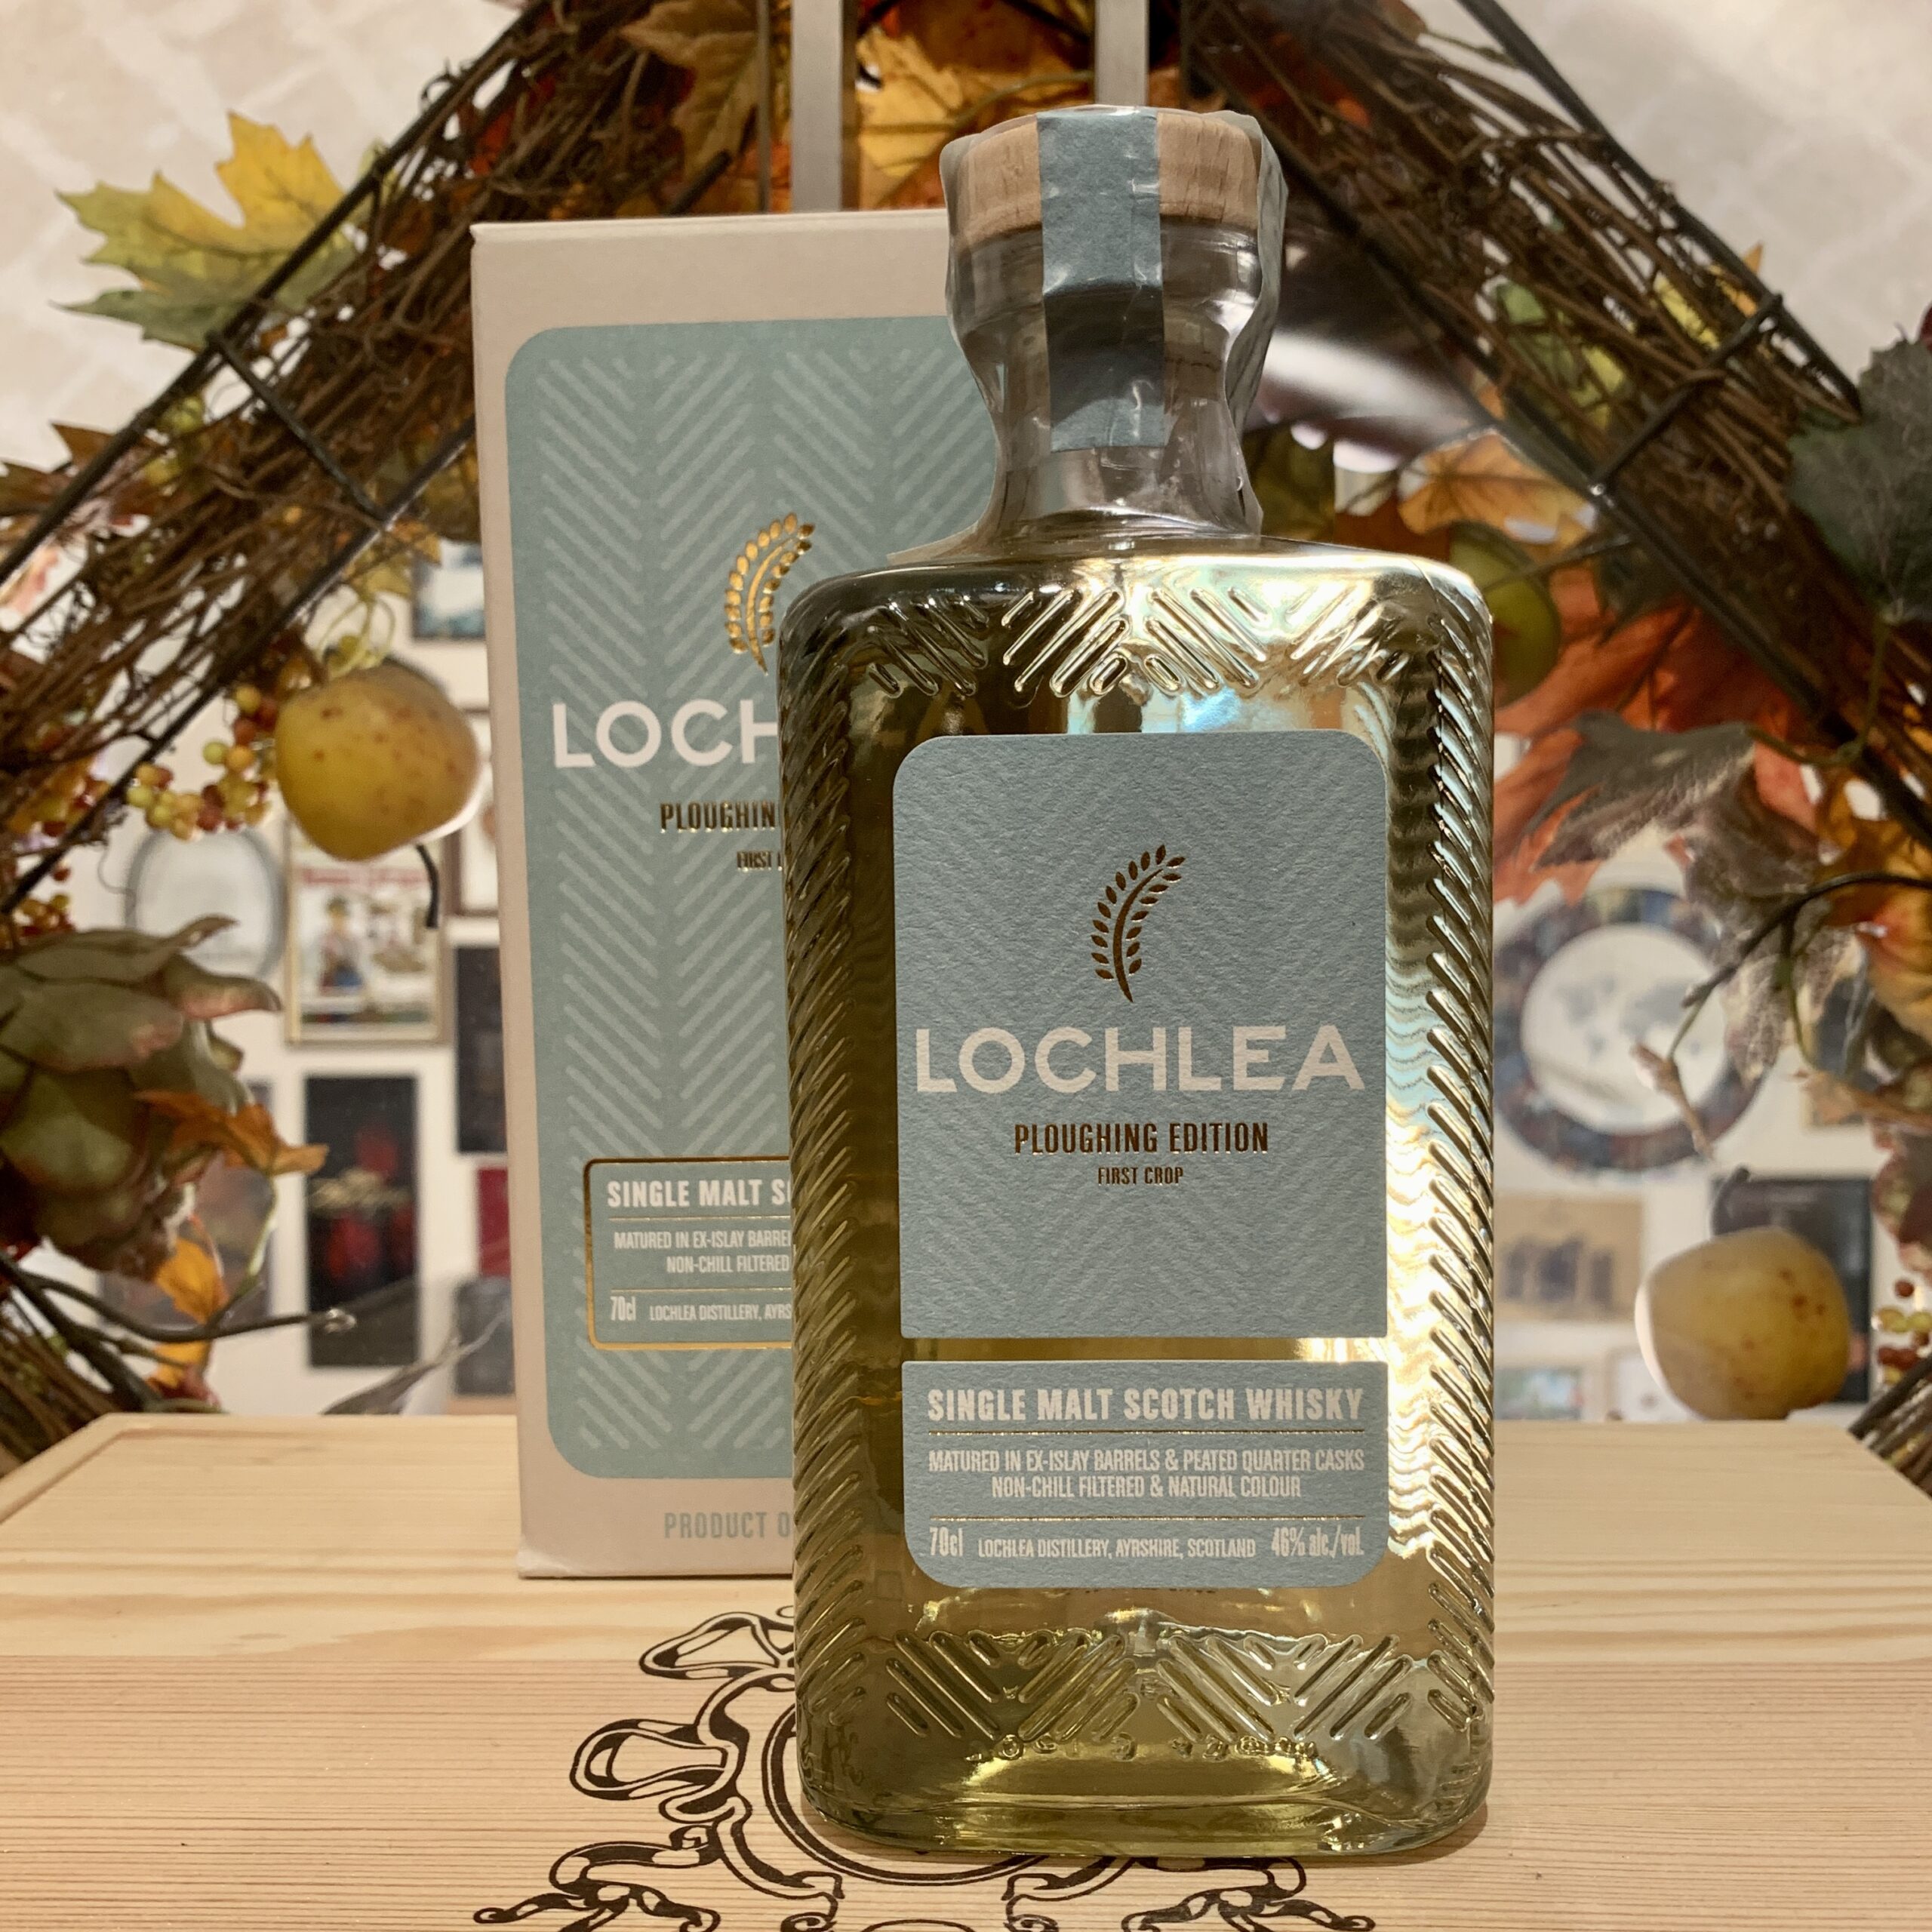 Lochlea “Ploughing Edition 1st Crop” Lowlands Single Malt Scotch Whisky